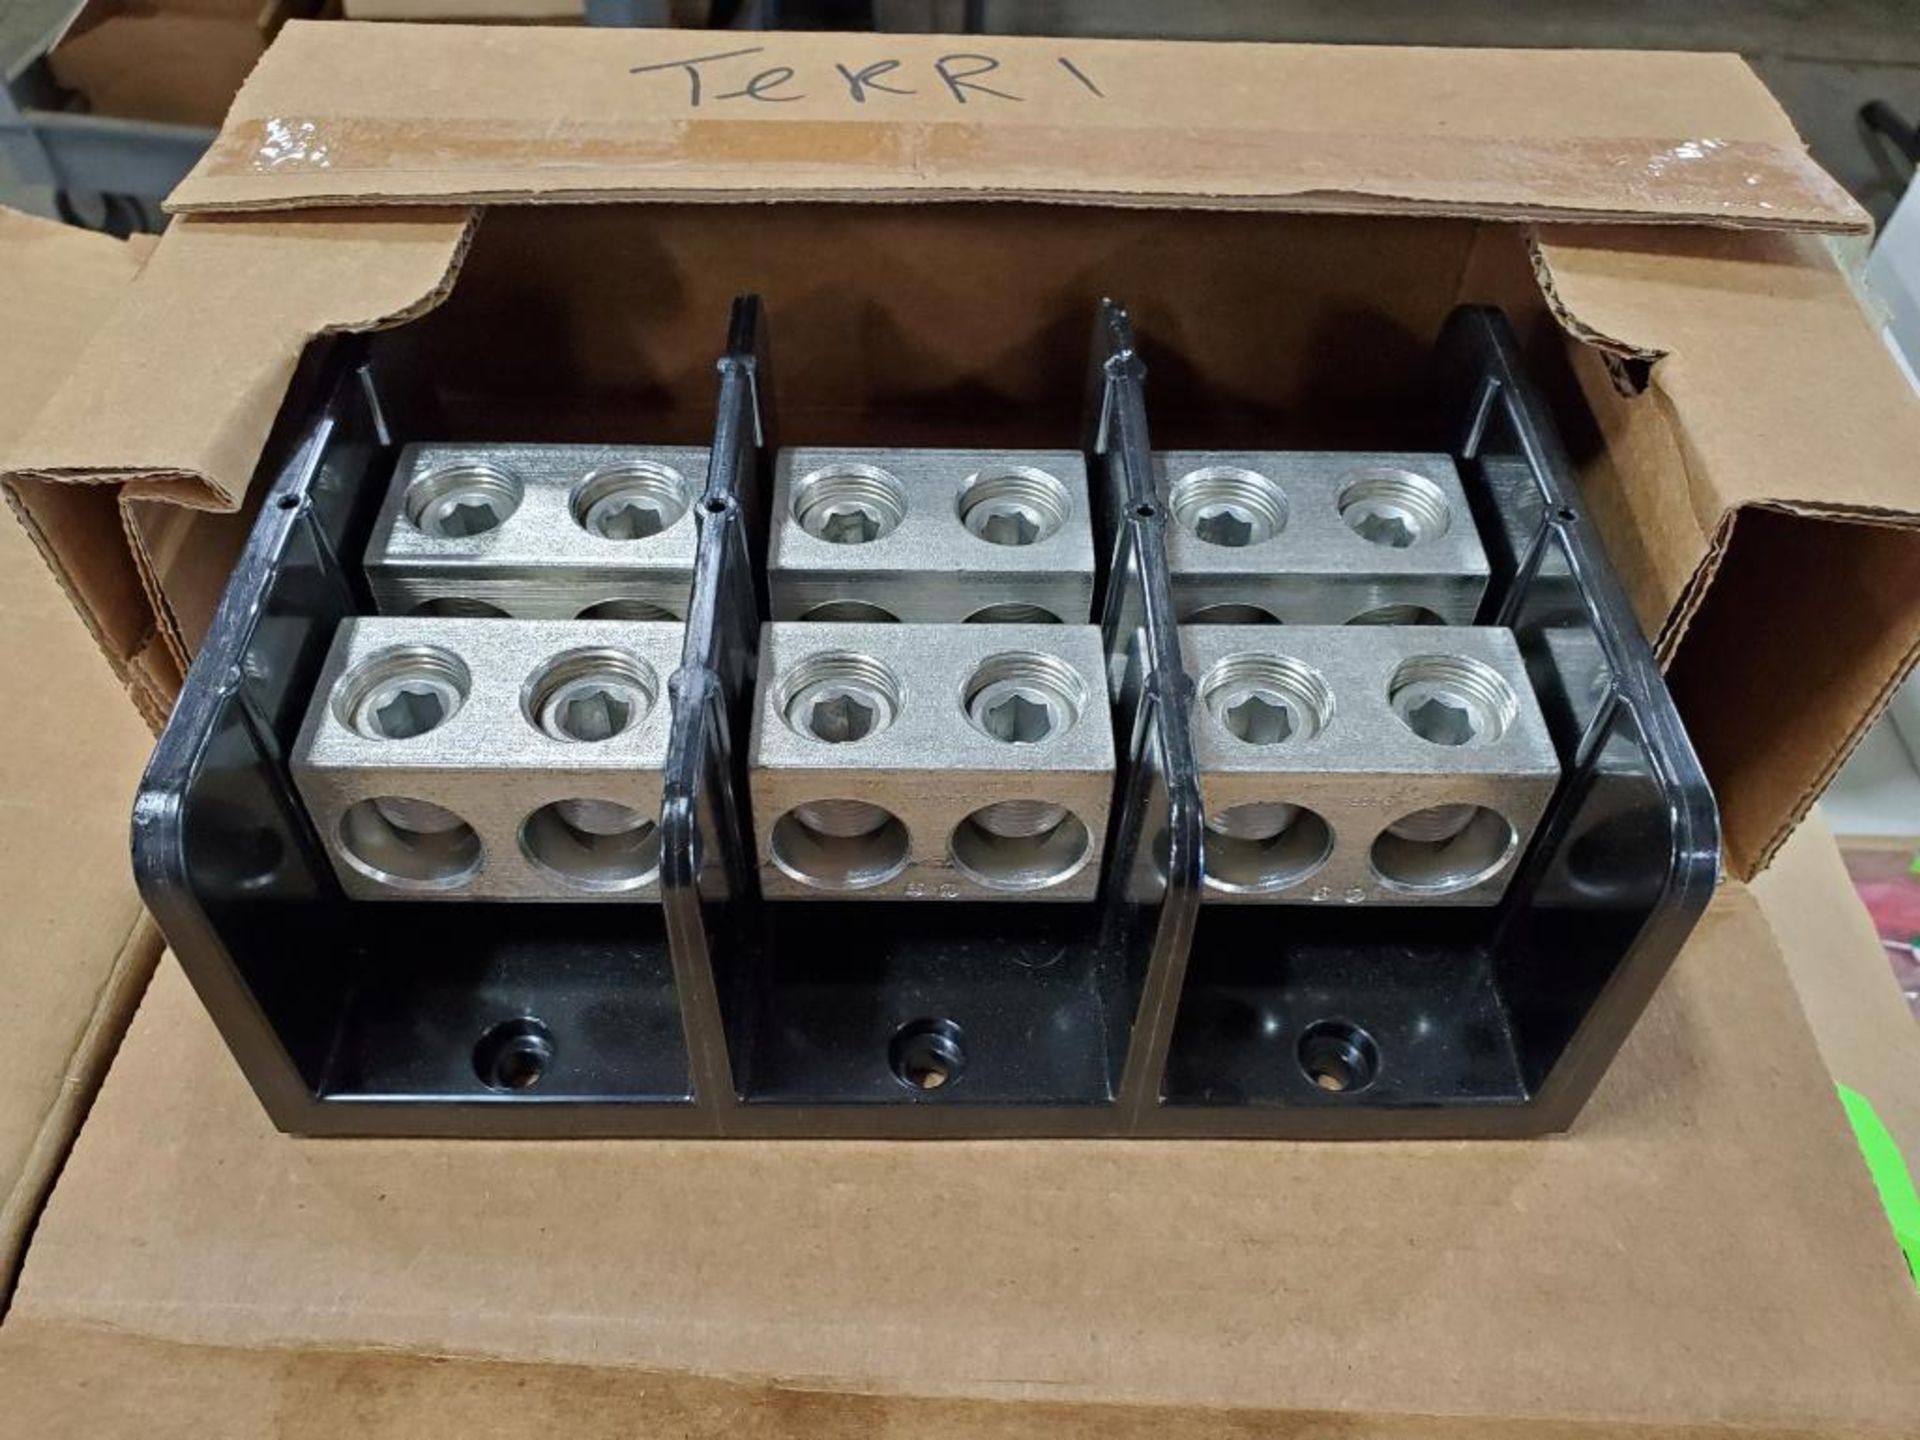 Qty 5 - Marathon power terminal block. Catalog 1453301. New in box. - Image 2 of 4